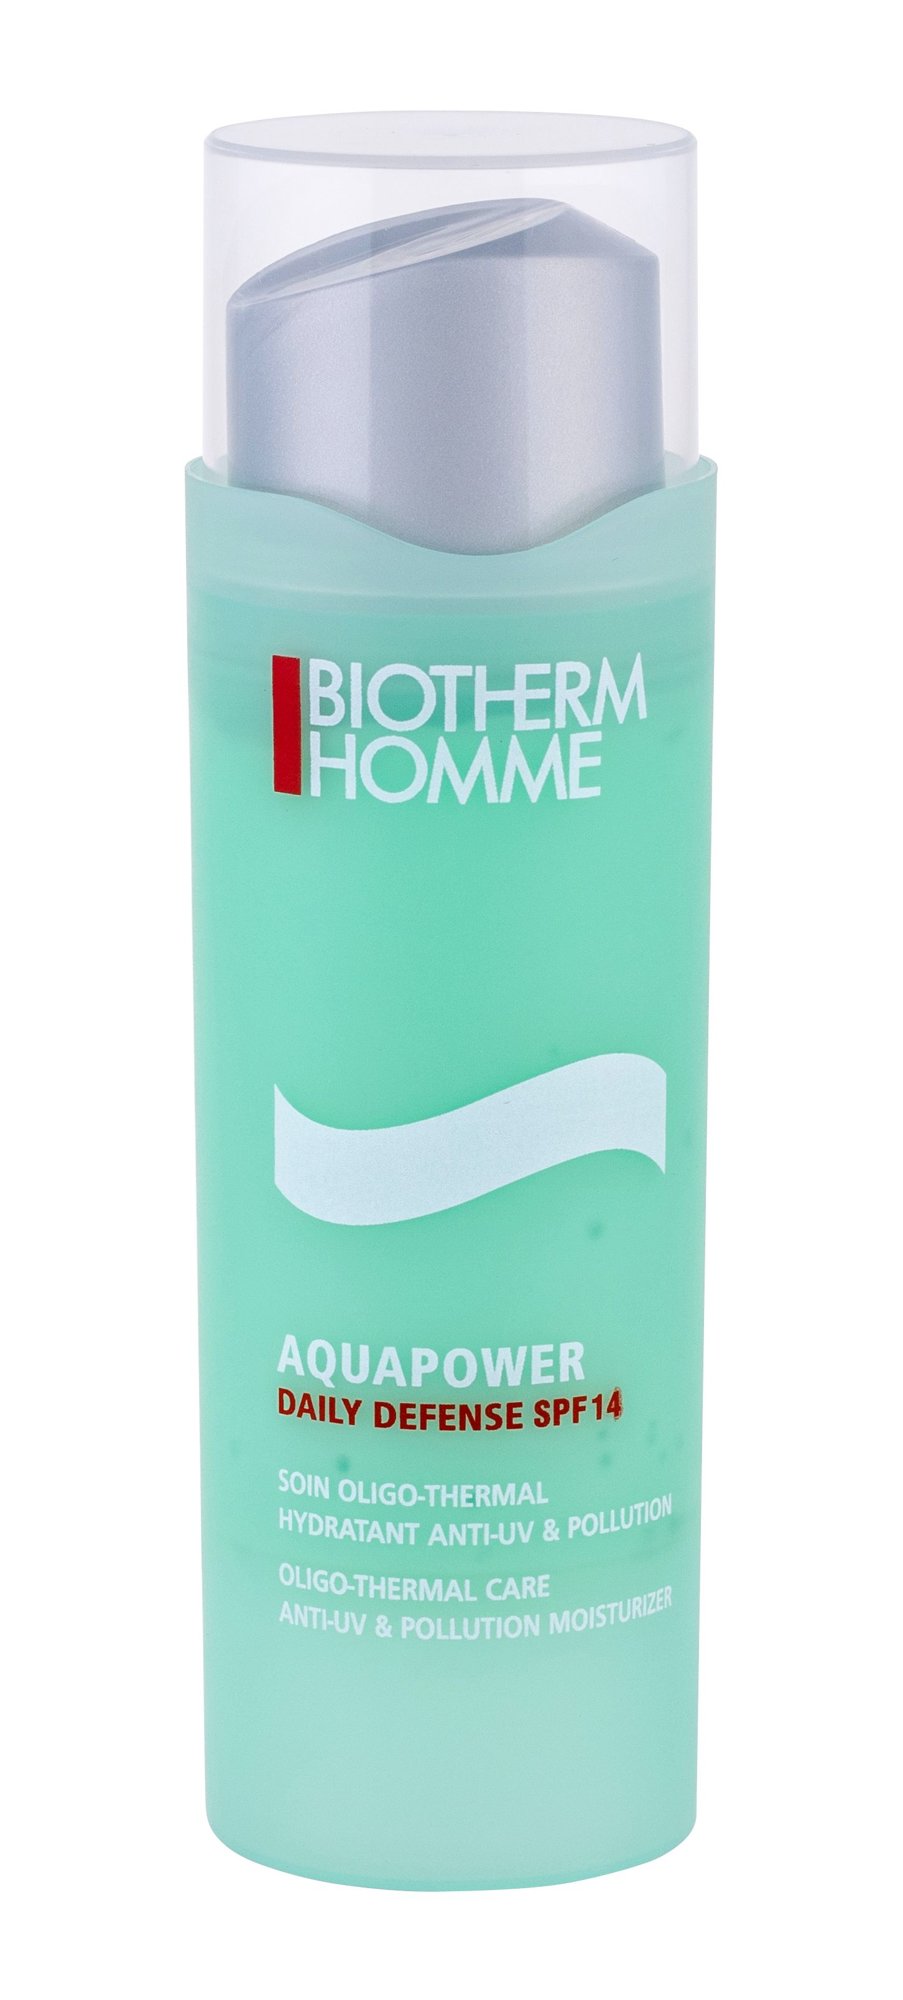 Biotherm Homme Aquapower Daily Defense veido gelis